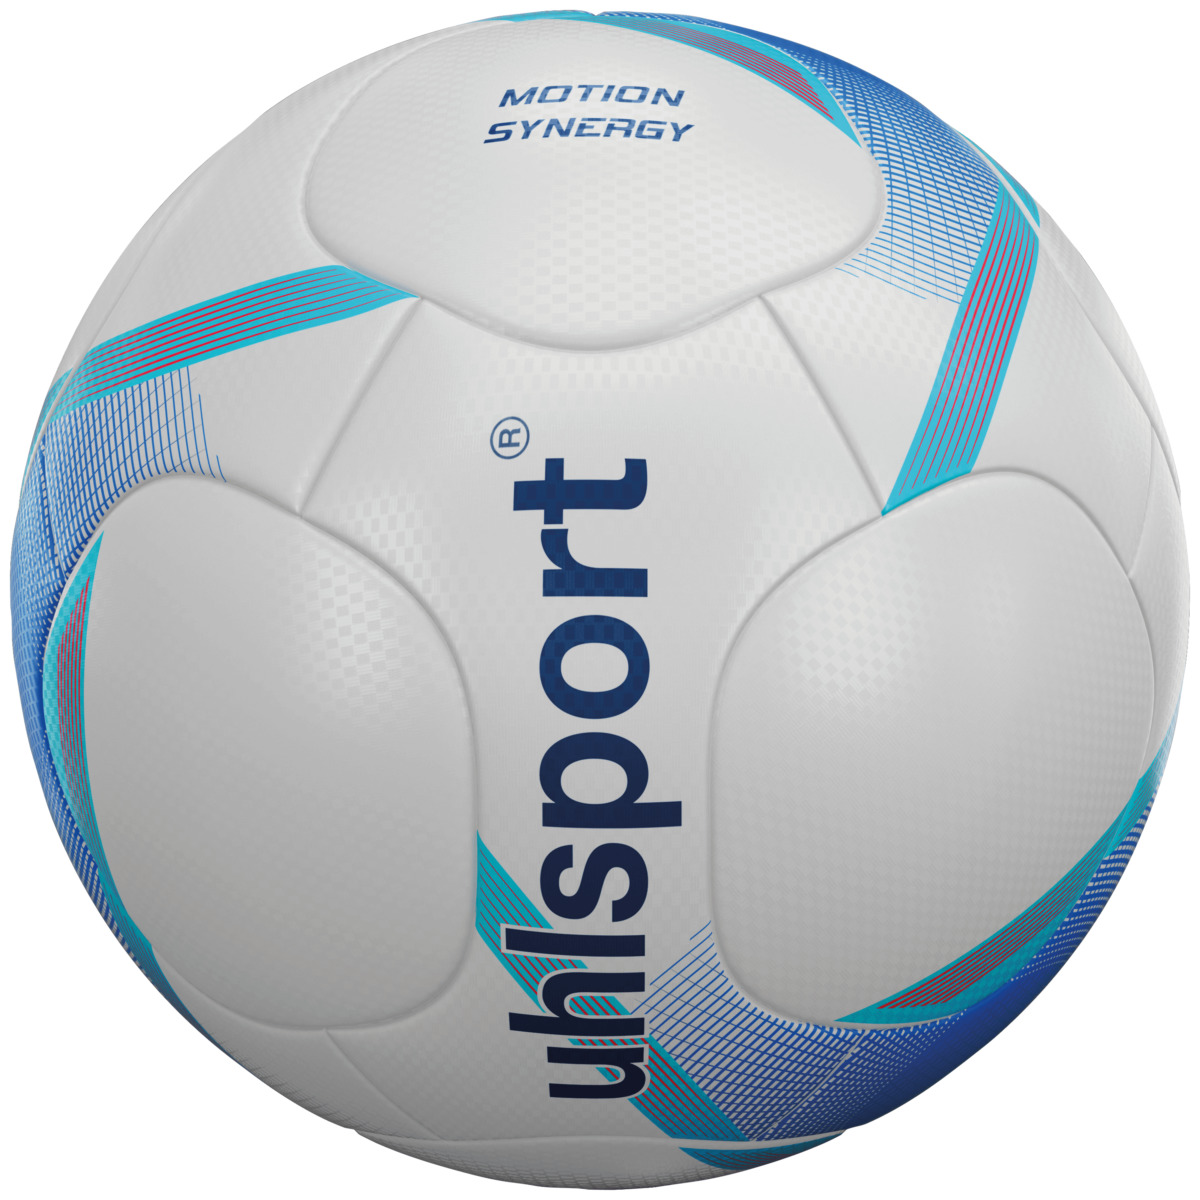 uhlsport Unisex - Erwachsene Motion Synergy Ball, Fußball, weiß/deep blau/Cyan, 5